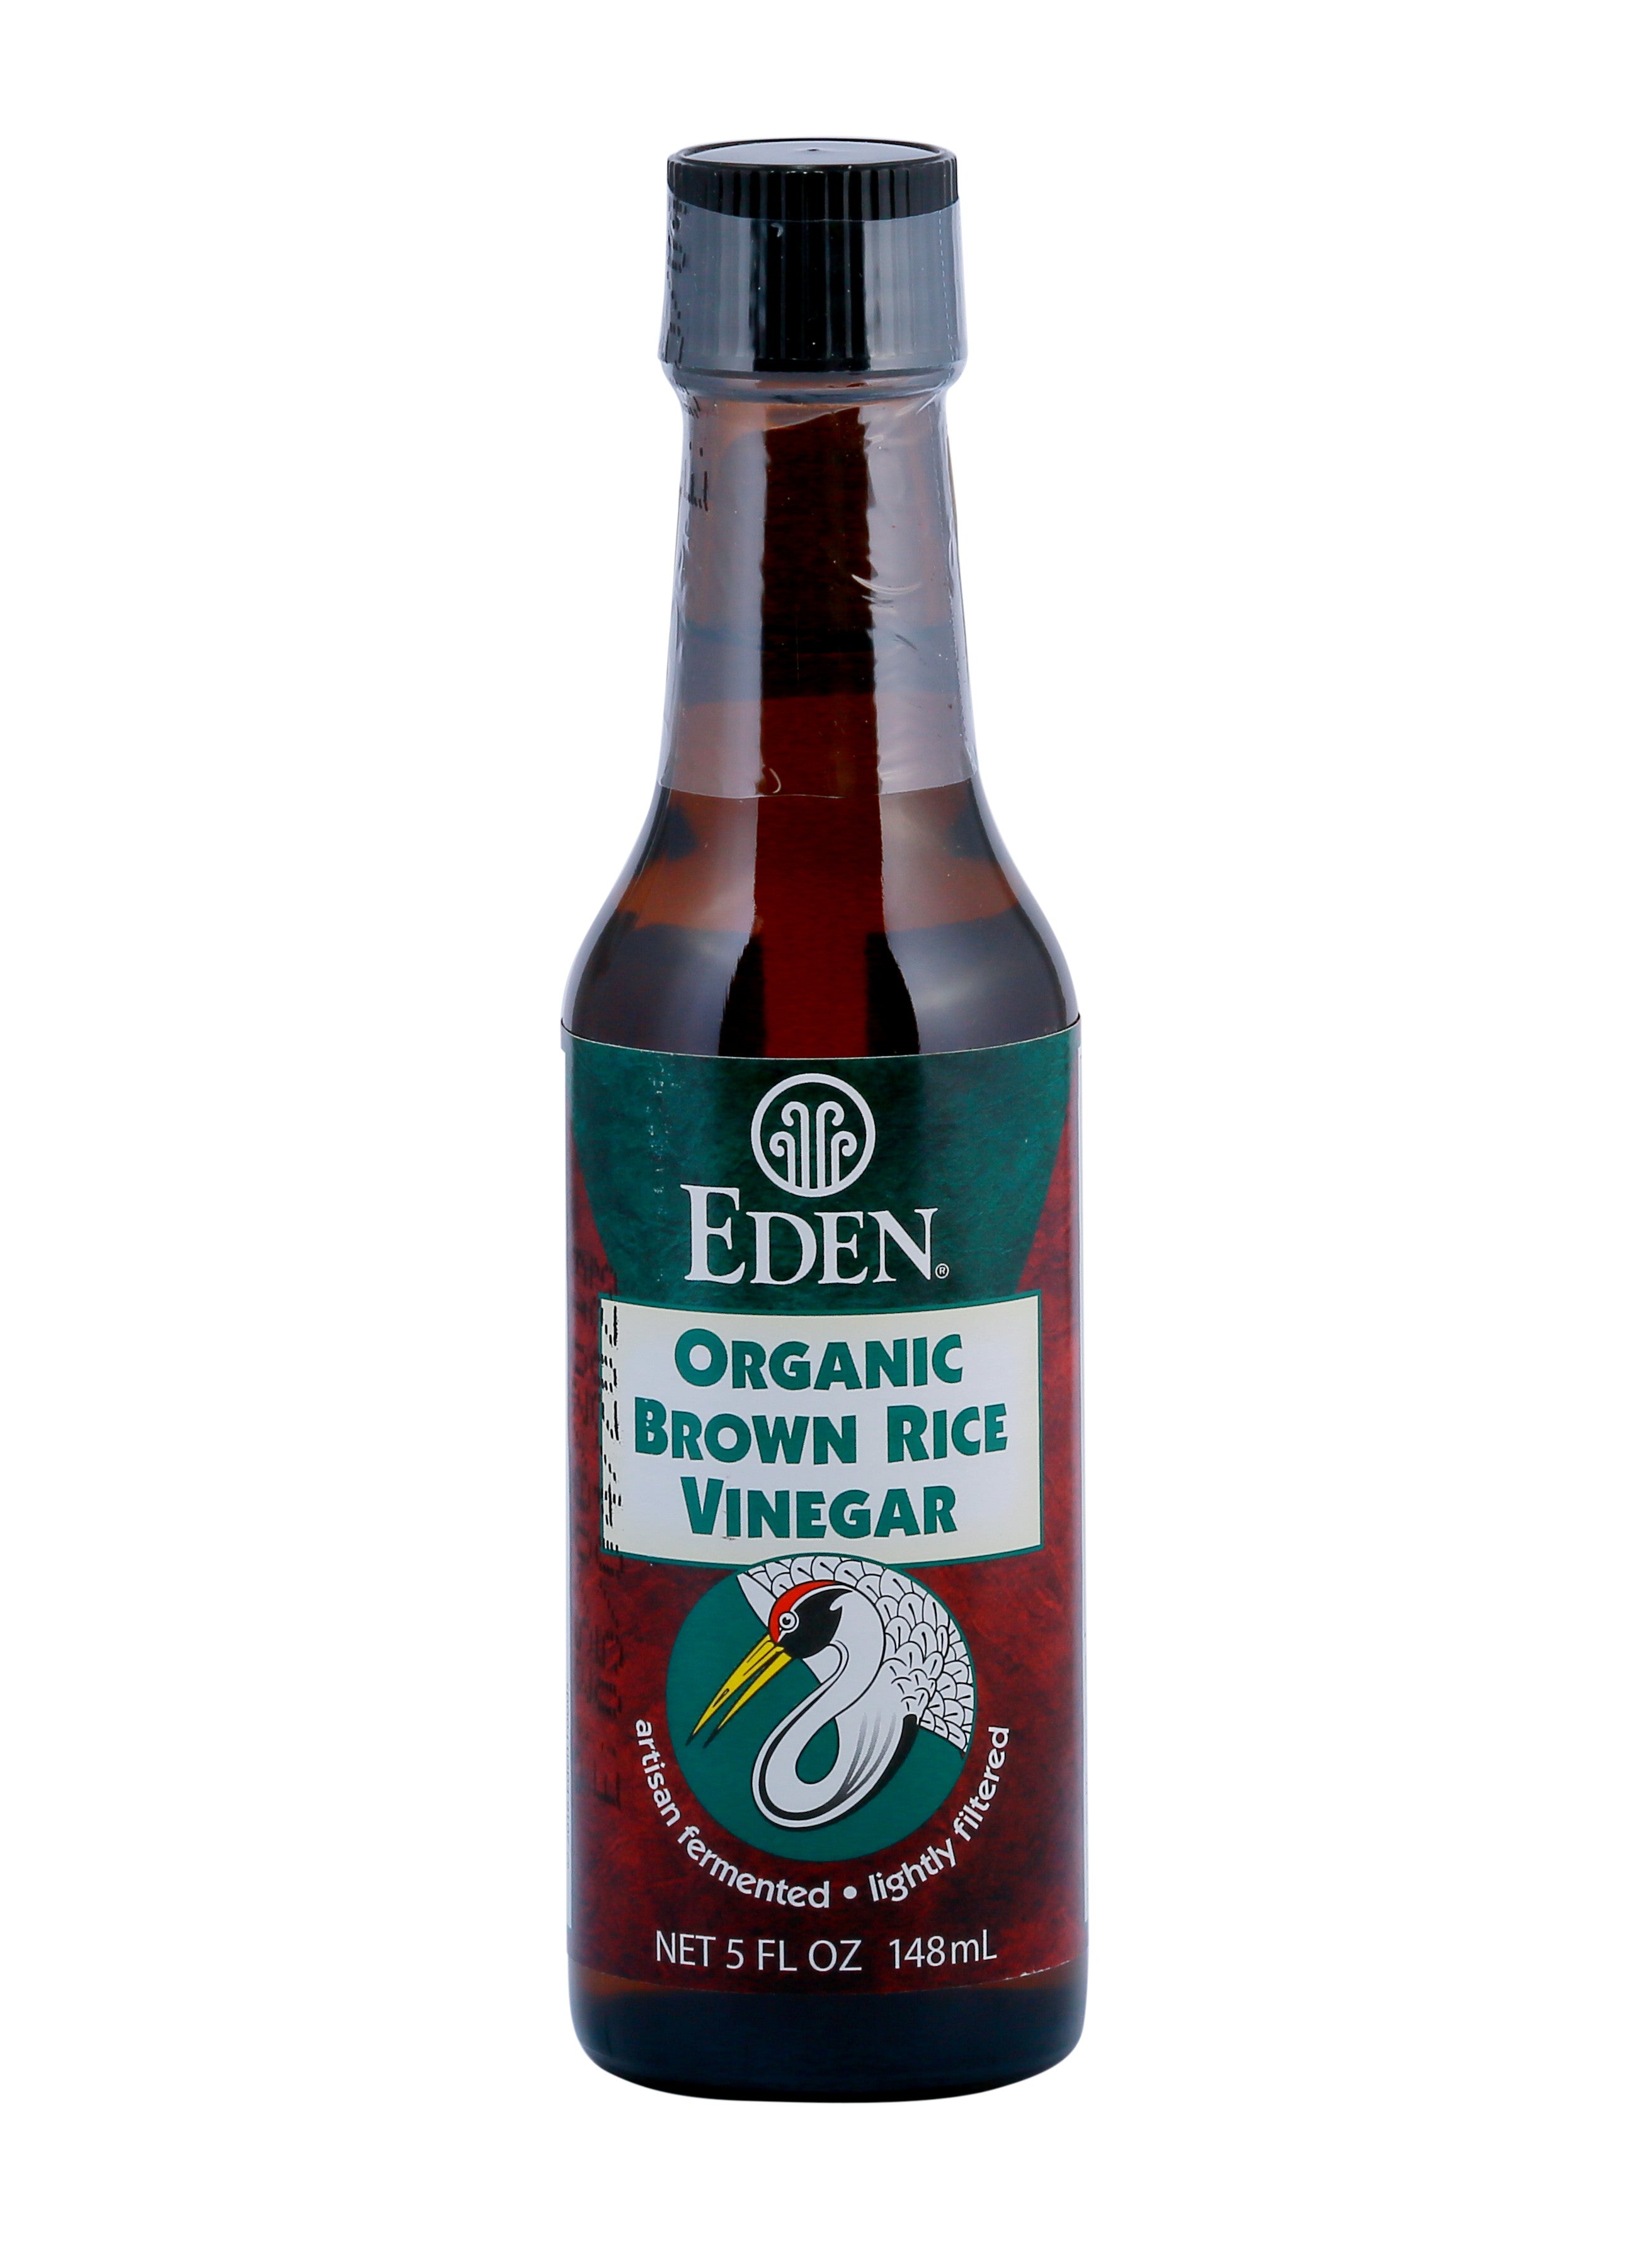 EDEN Organic Brown Rice Vinegar, 148ml